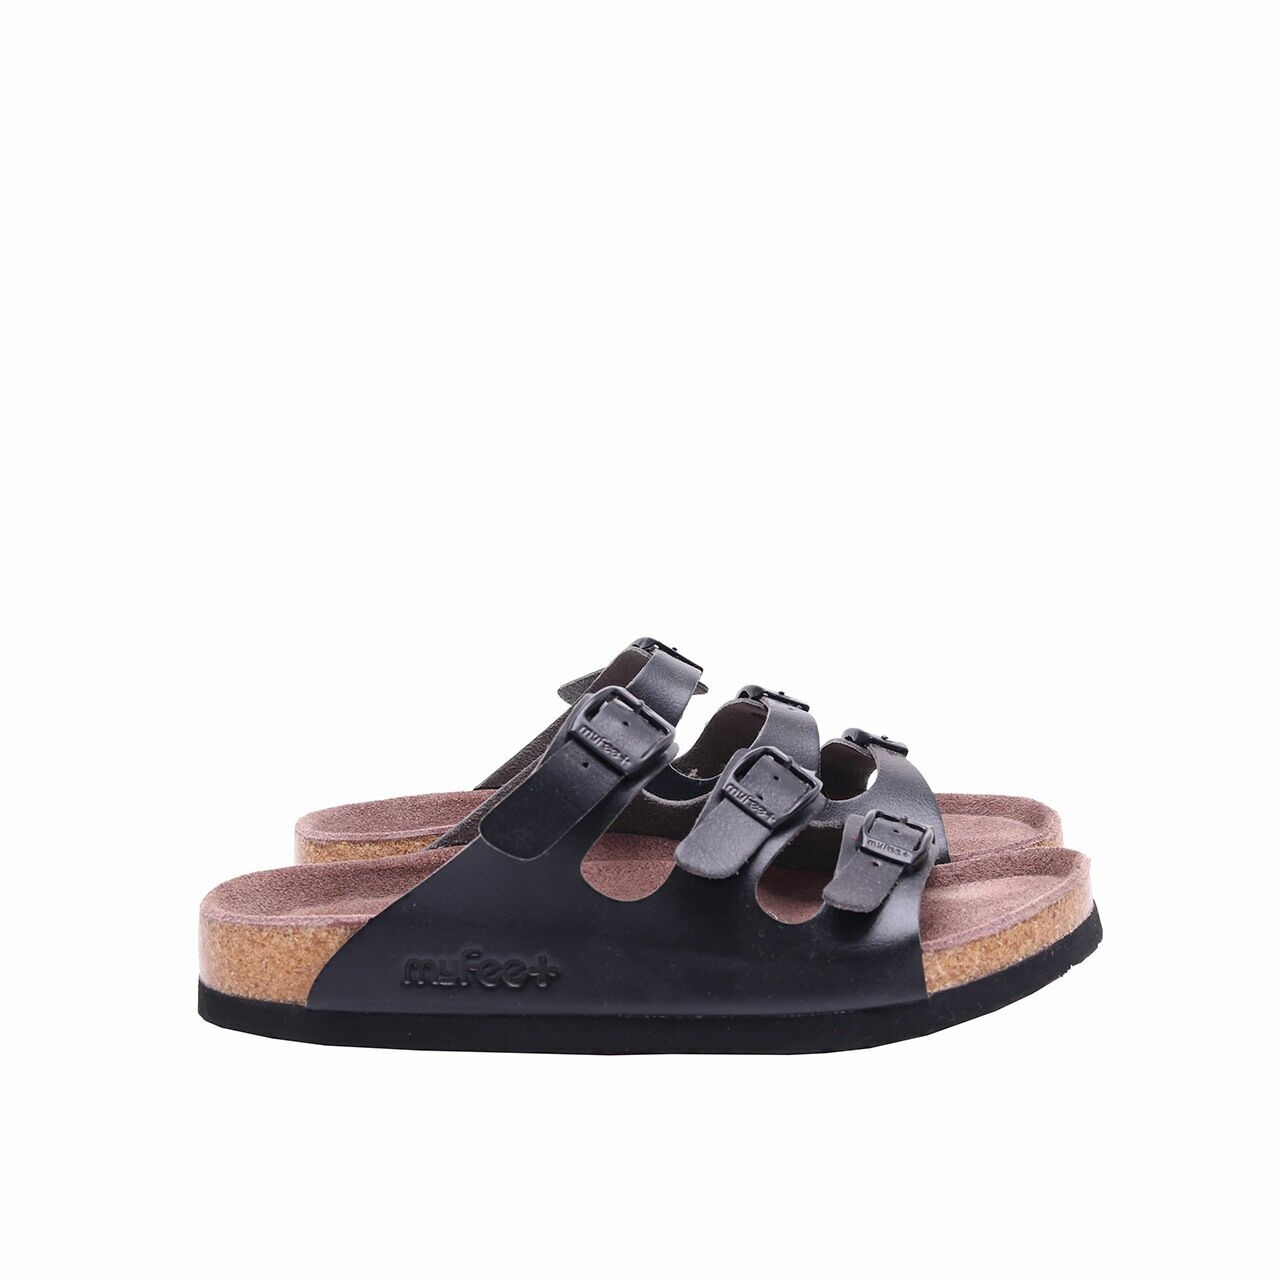 Myfeet Black F3 Sandals